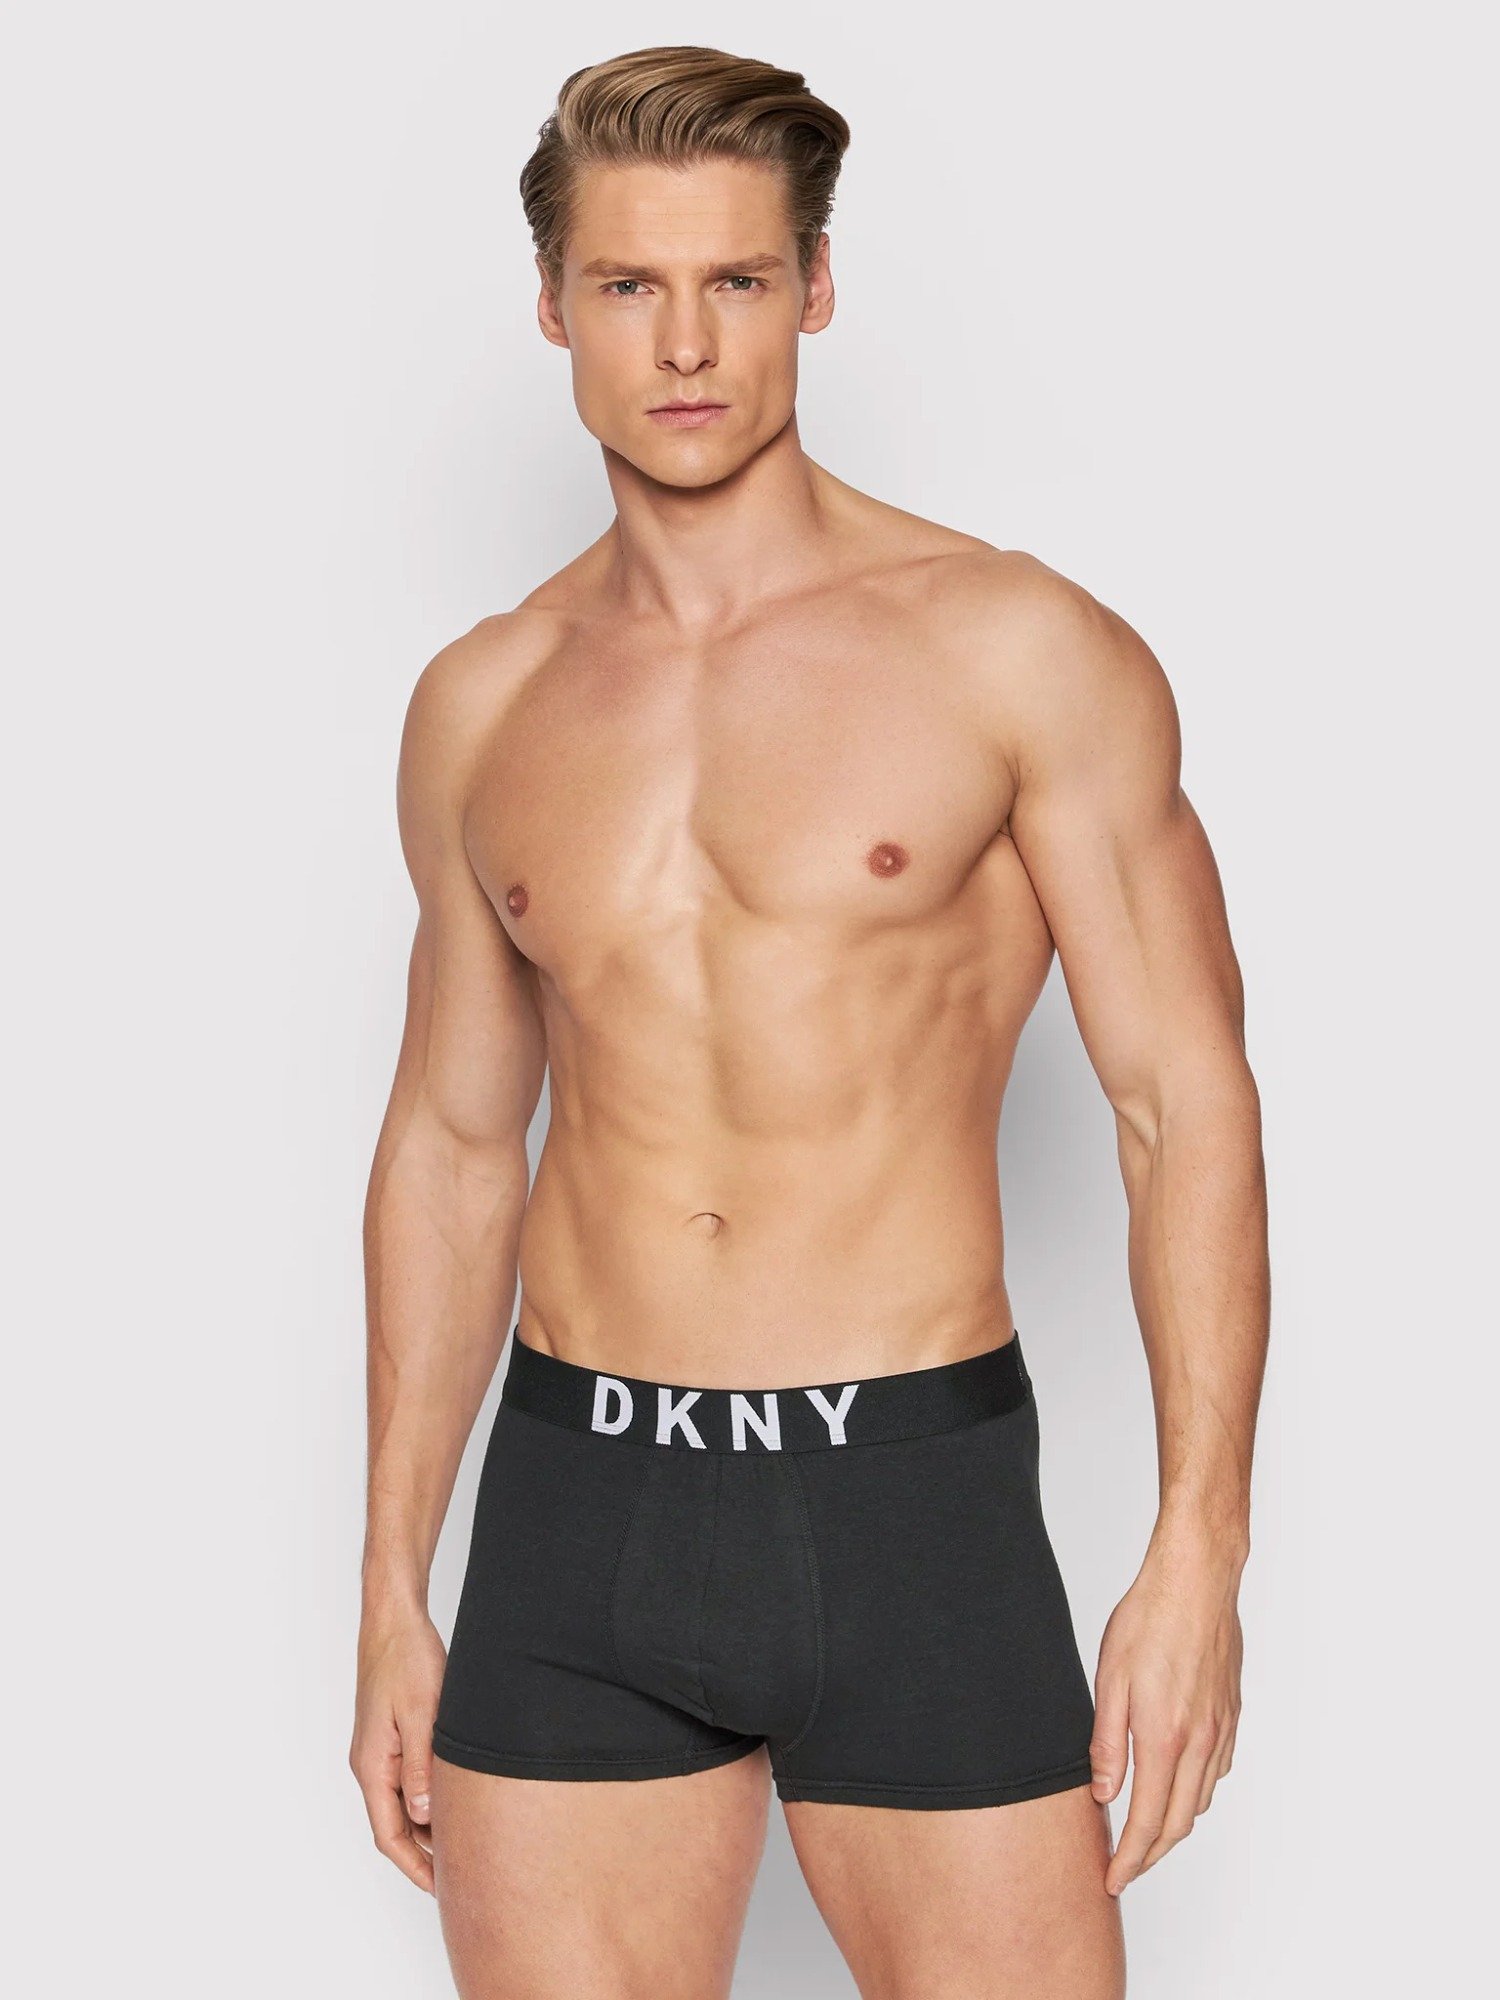  DKNY Men's Walpi Soft 5 Pack Boxer Briefs - Black/Grey